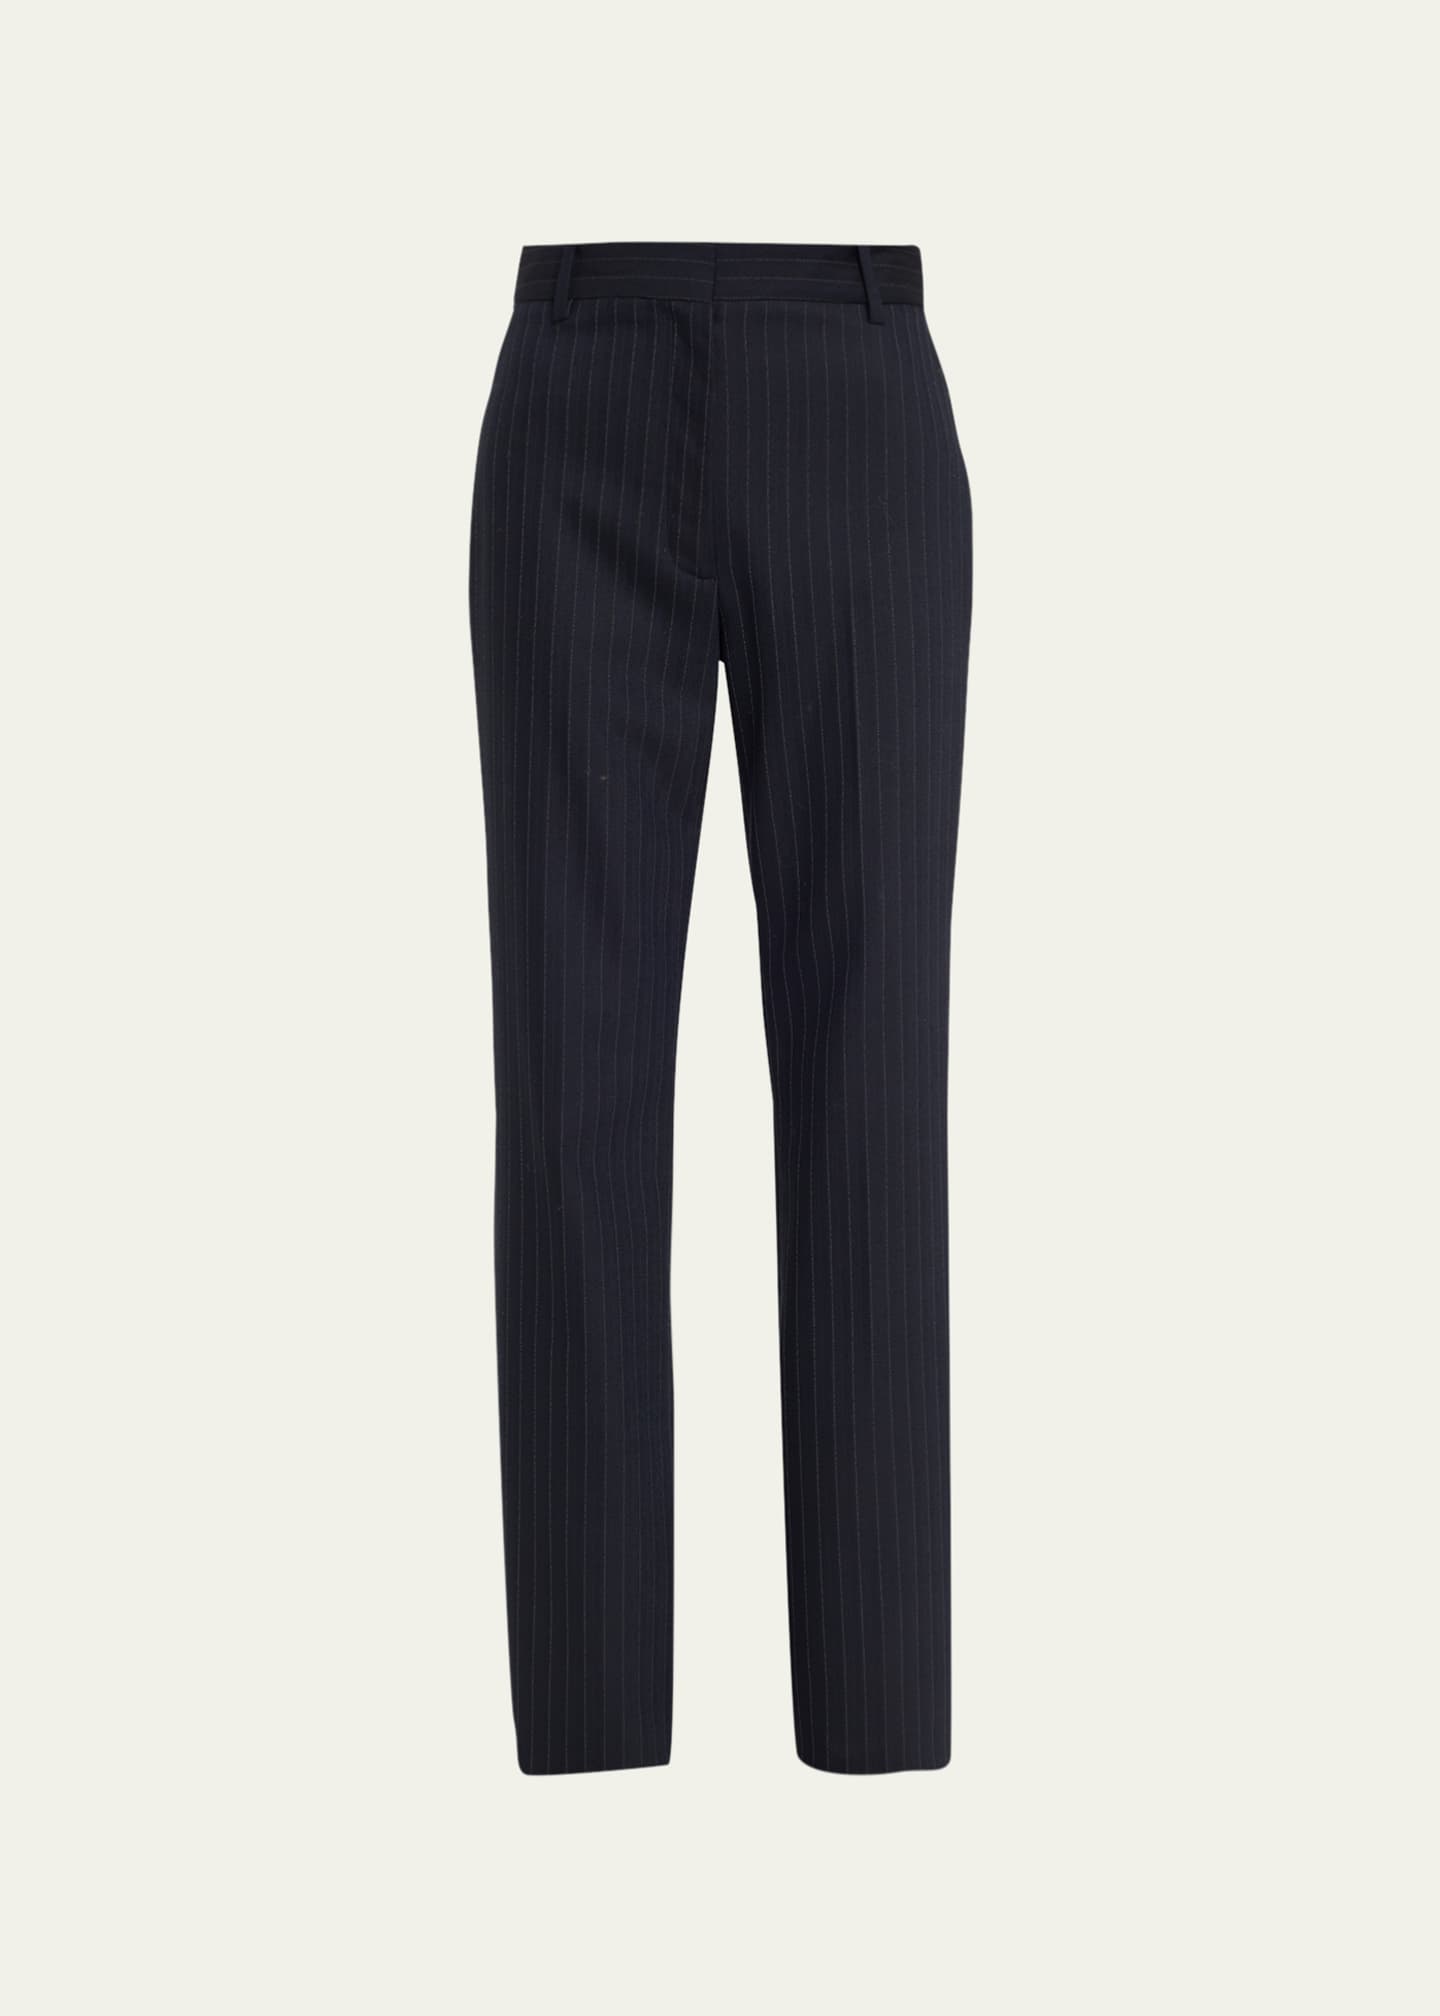 Nili Lotan Black Pinstripe 100% Virgin Wool Corette Pants Size US